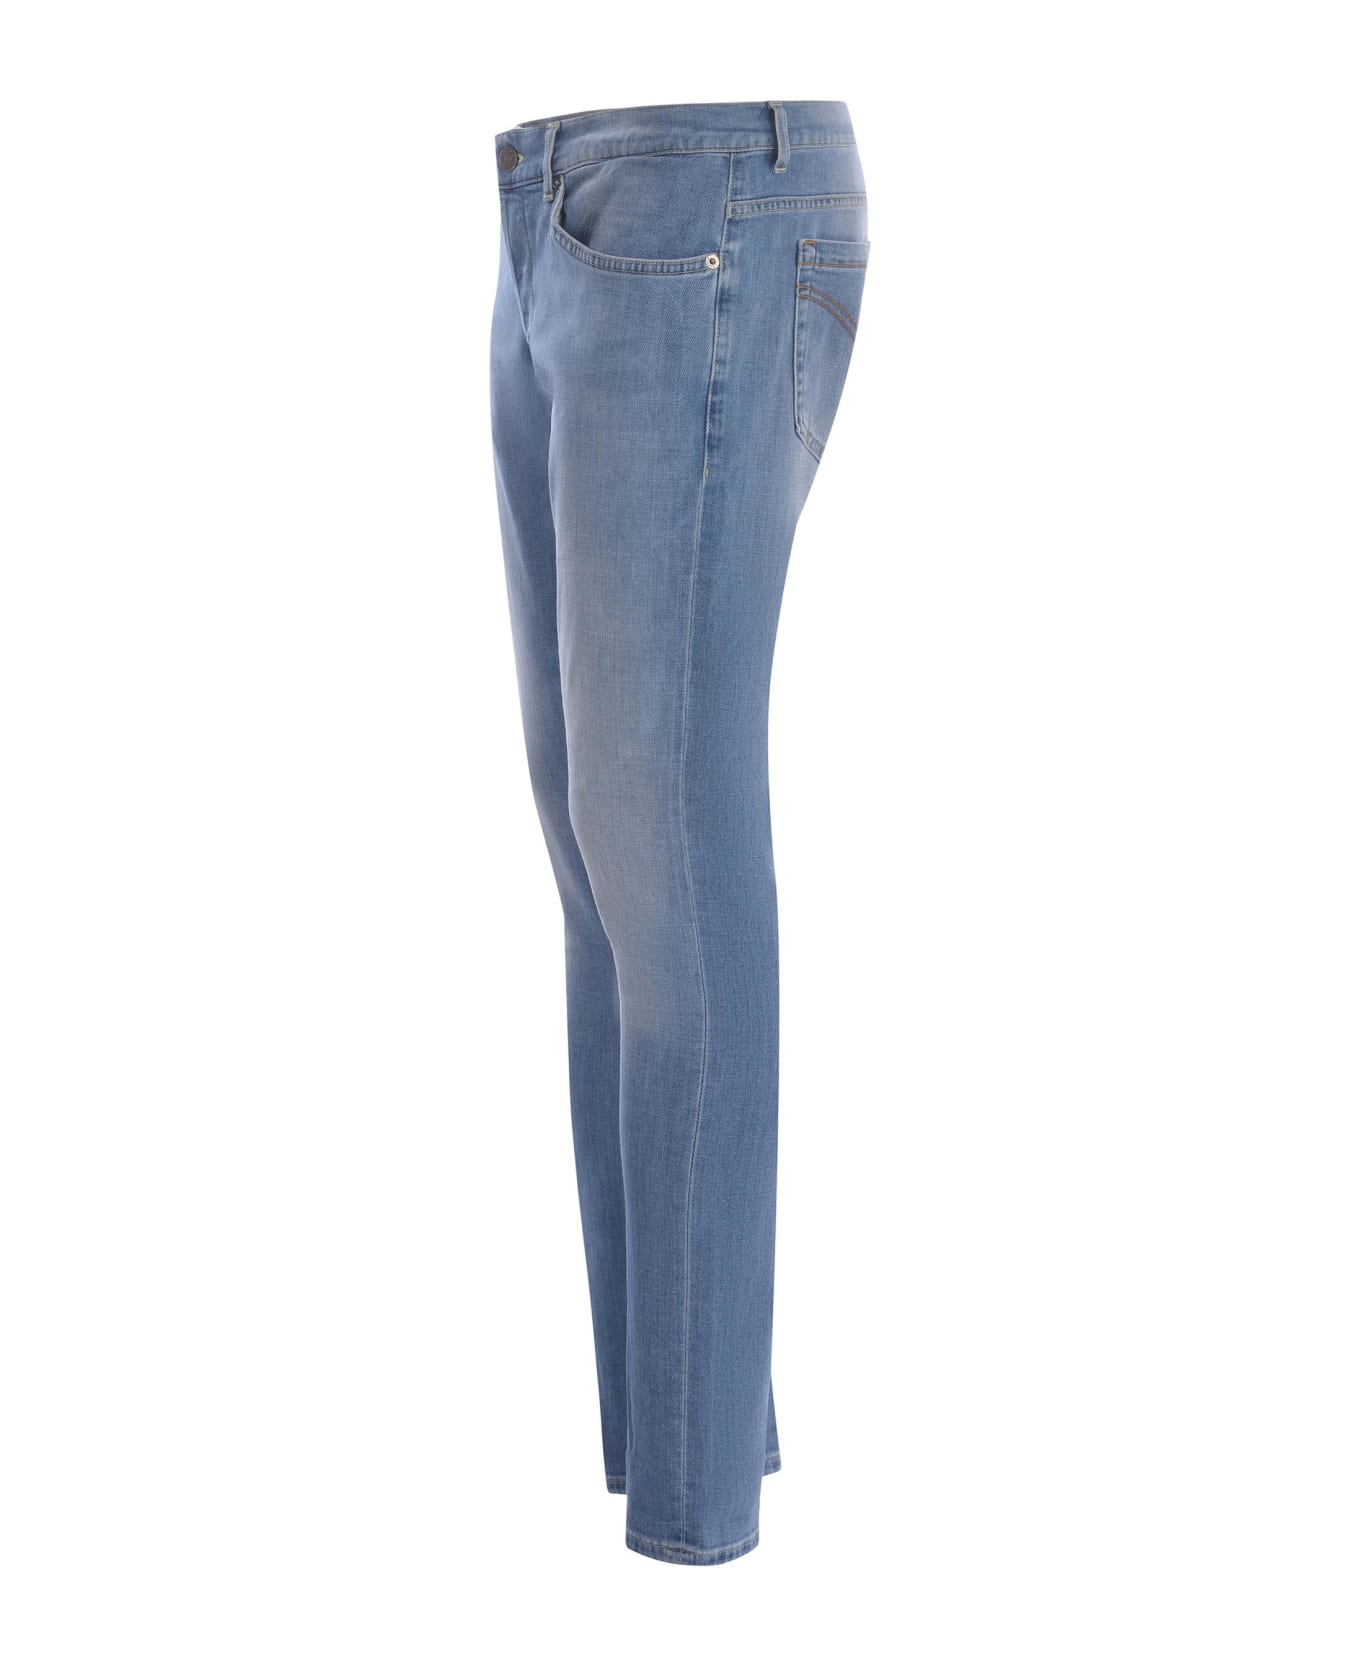 Dondup Jeans Dondup "george" Made Of Stretch Denim - Denim azzurro chiaro